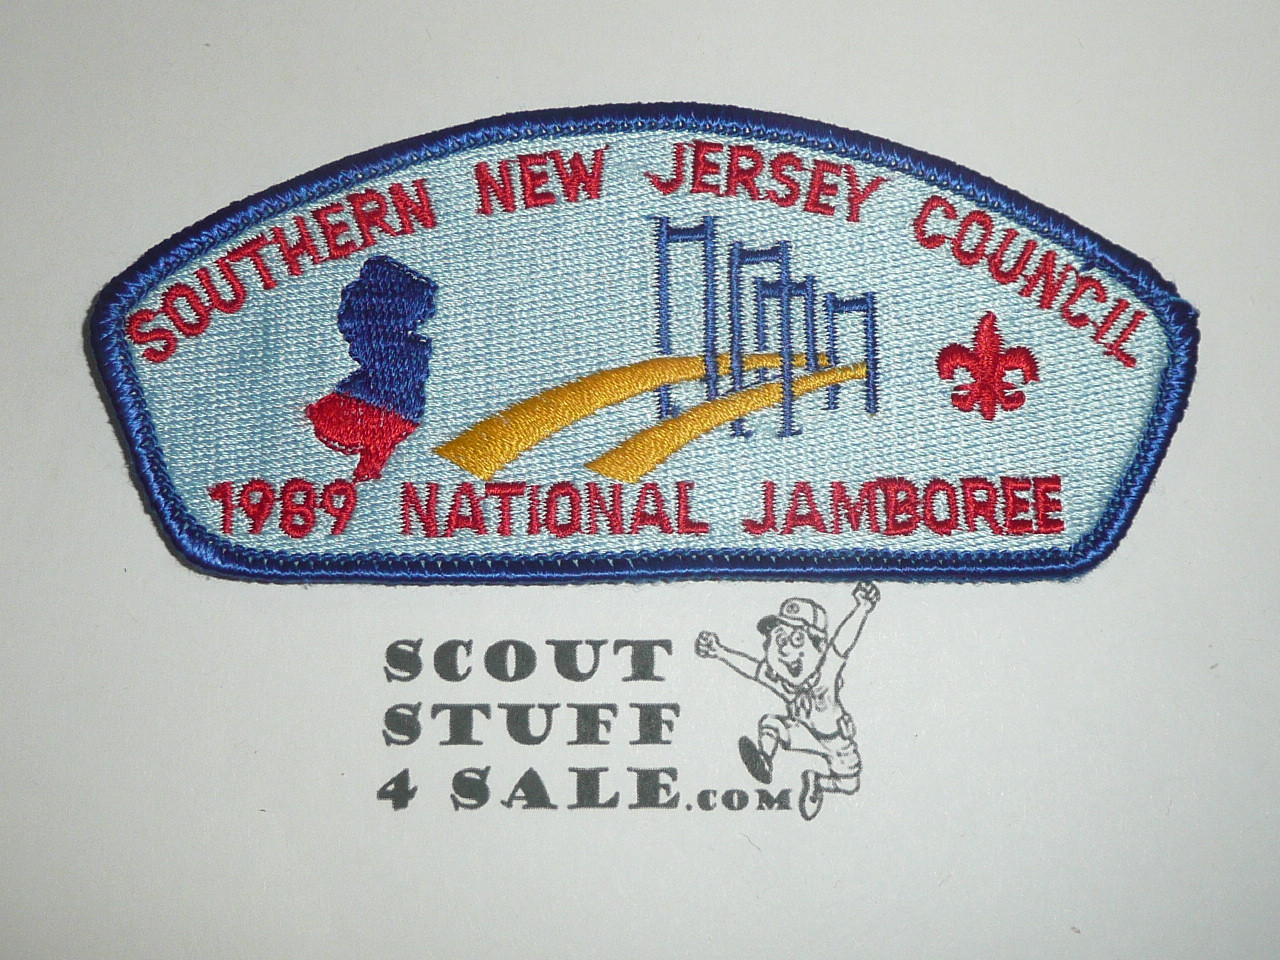 1989 National Jamboree JSP - Southern New Jersey Council